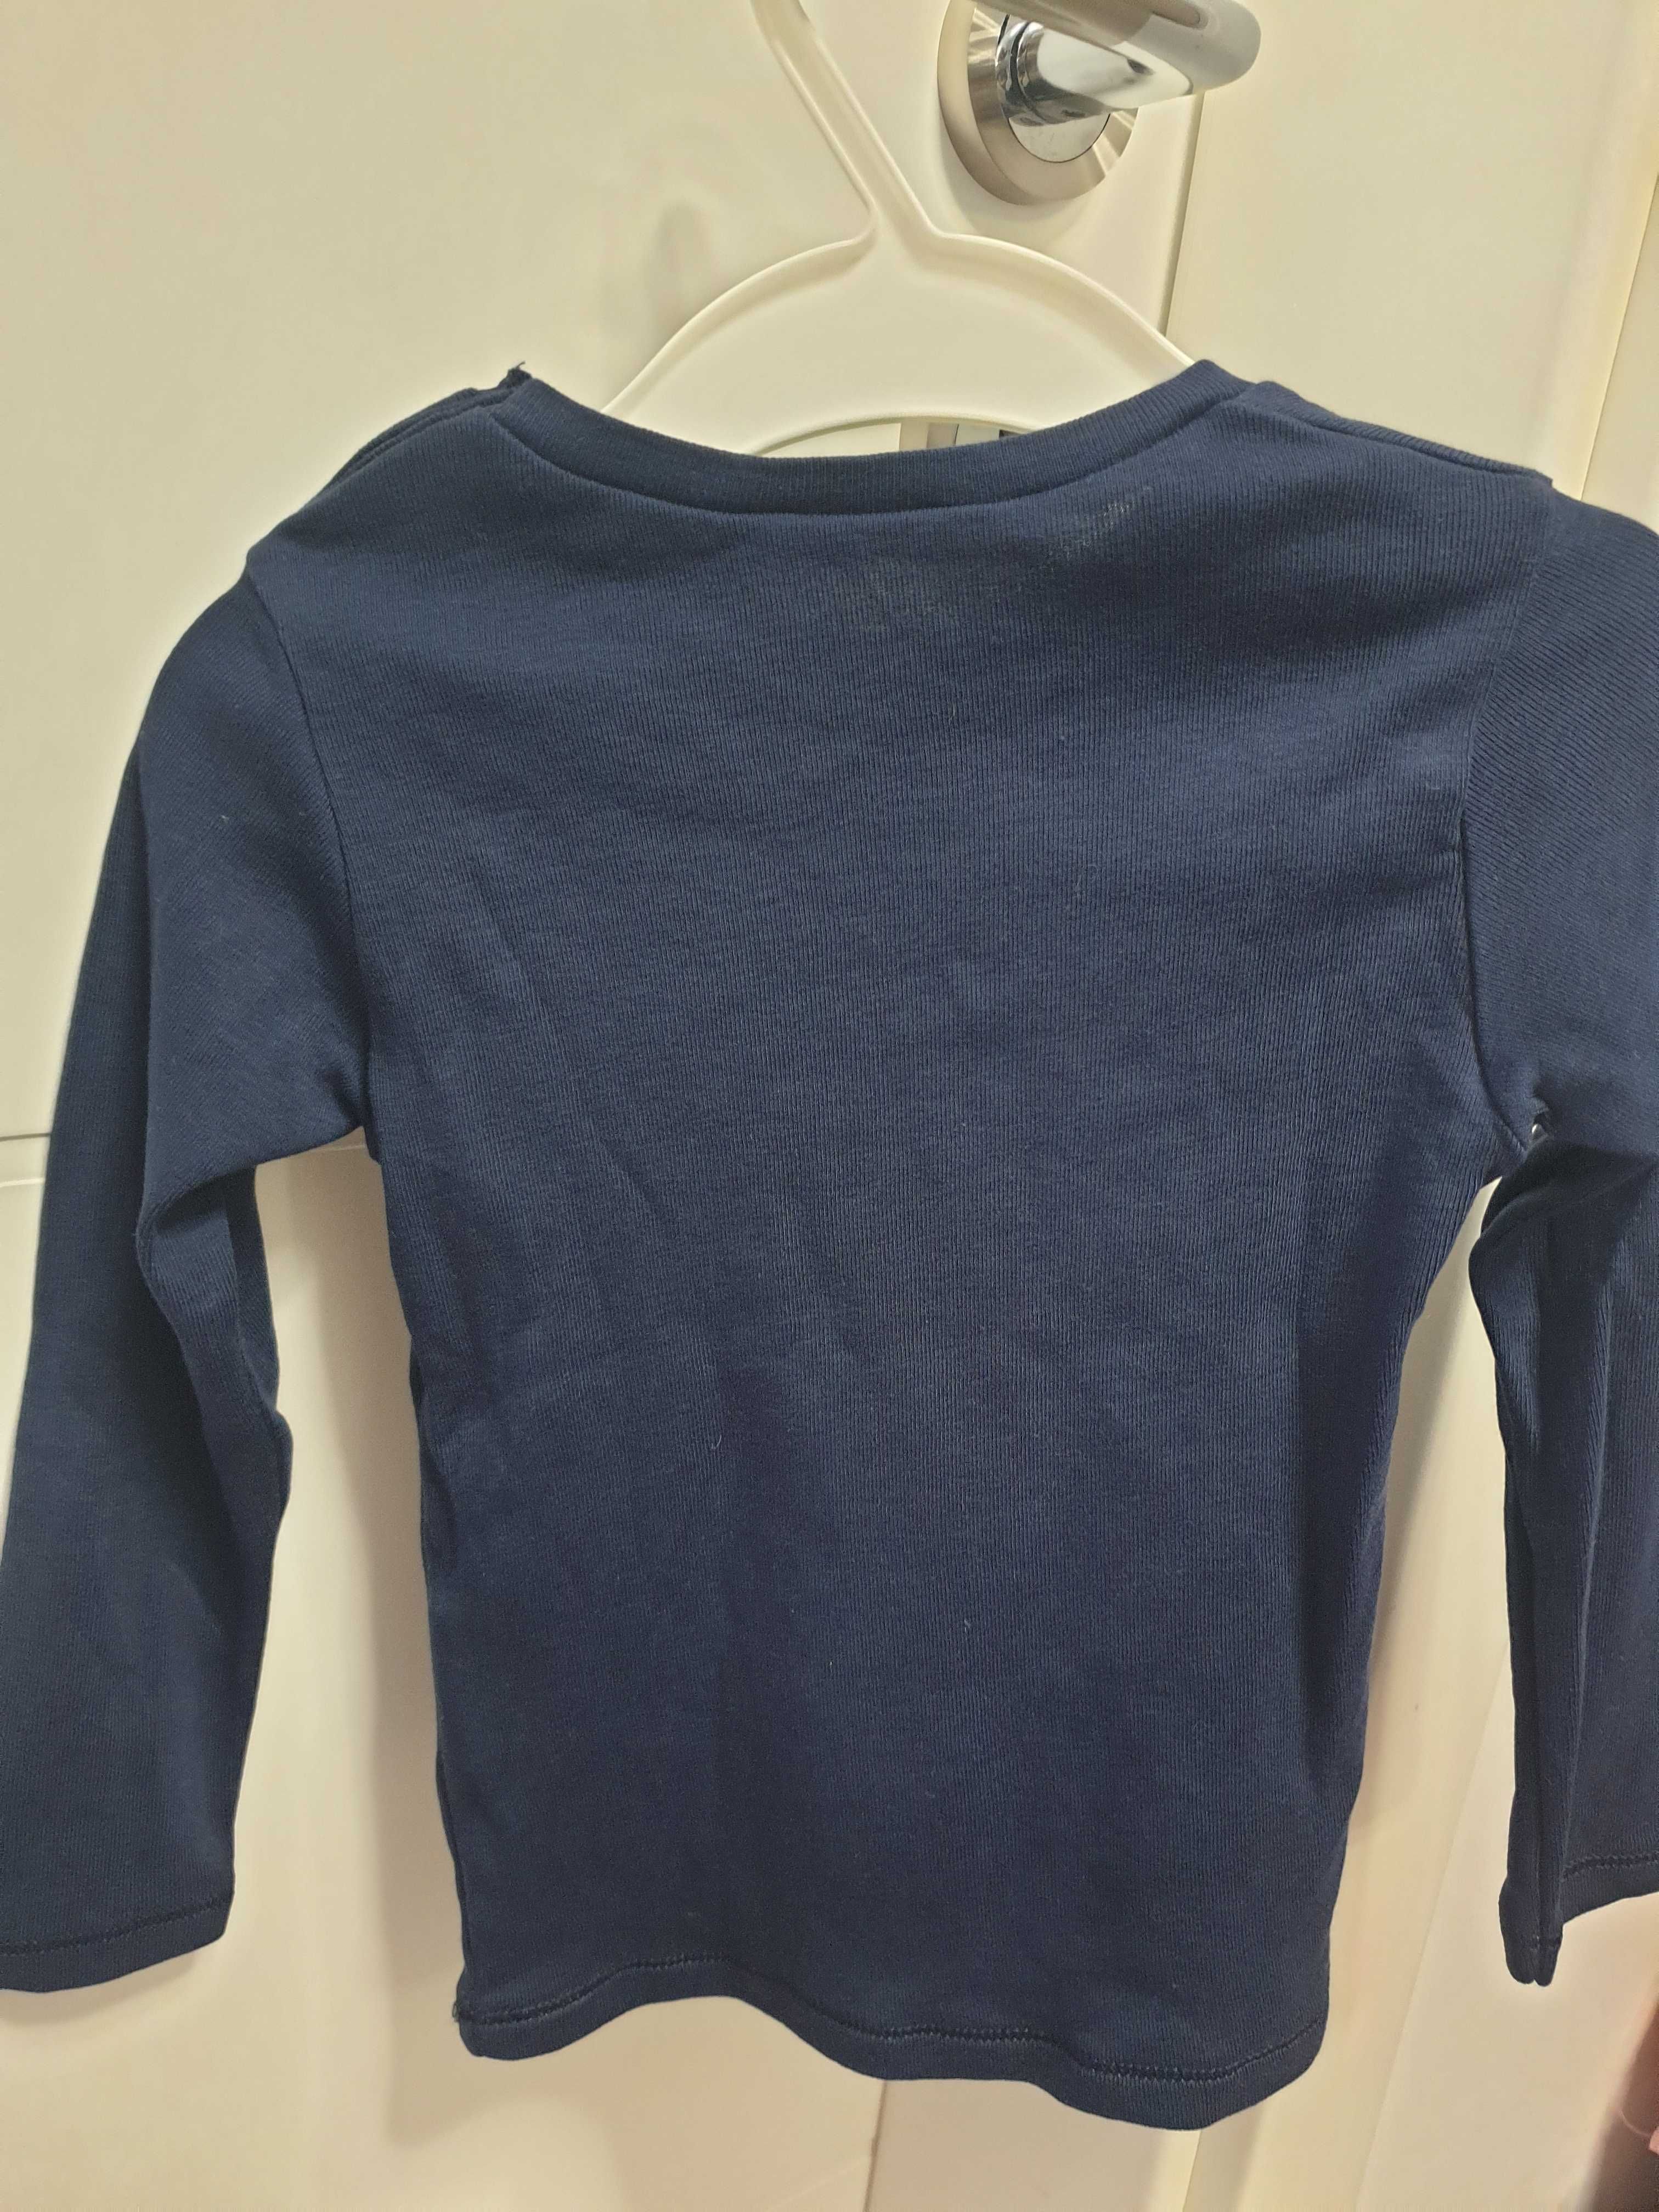 Bluze fetite Benetton marimea 12-18 luni/82 cm